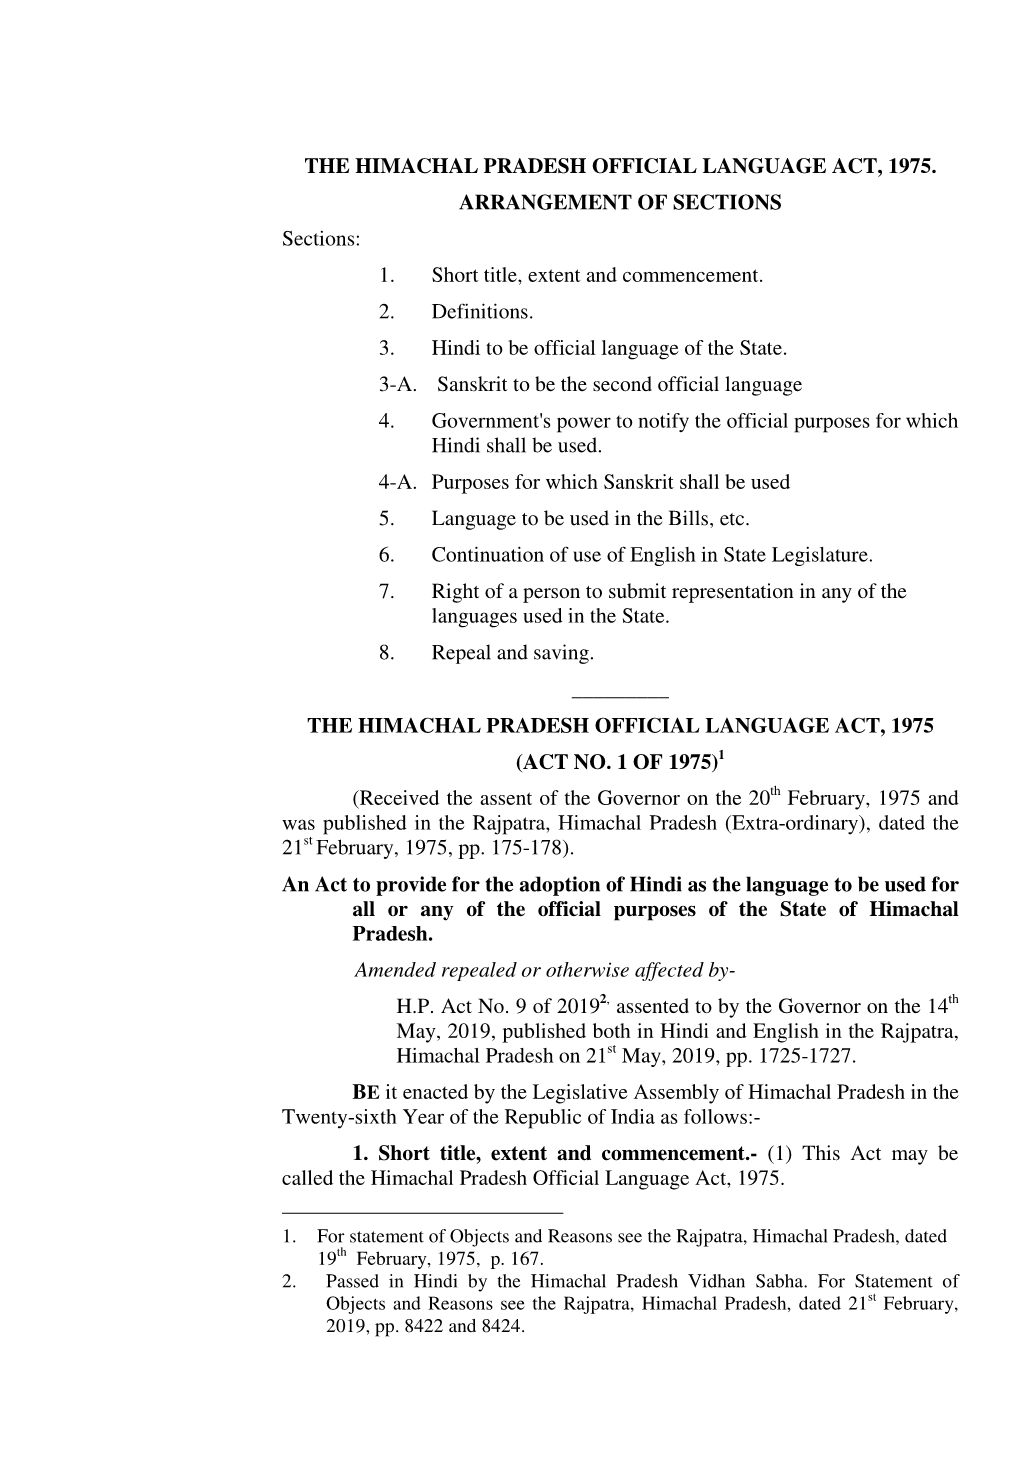 The Himachal Pradesh Official Language Act, 1975